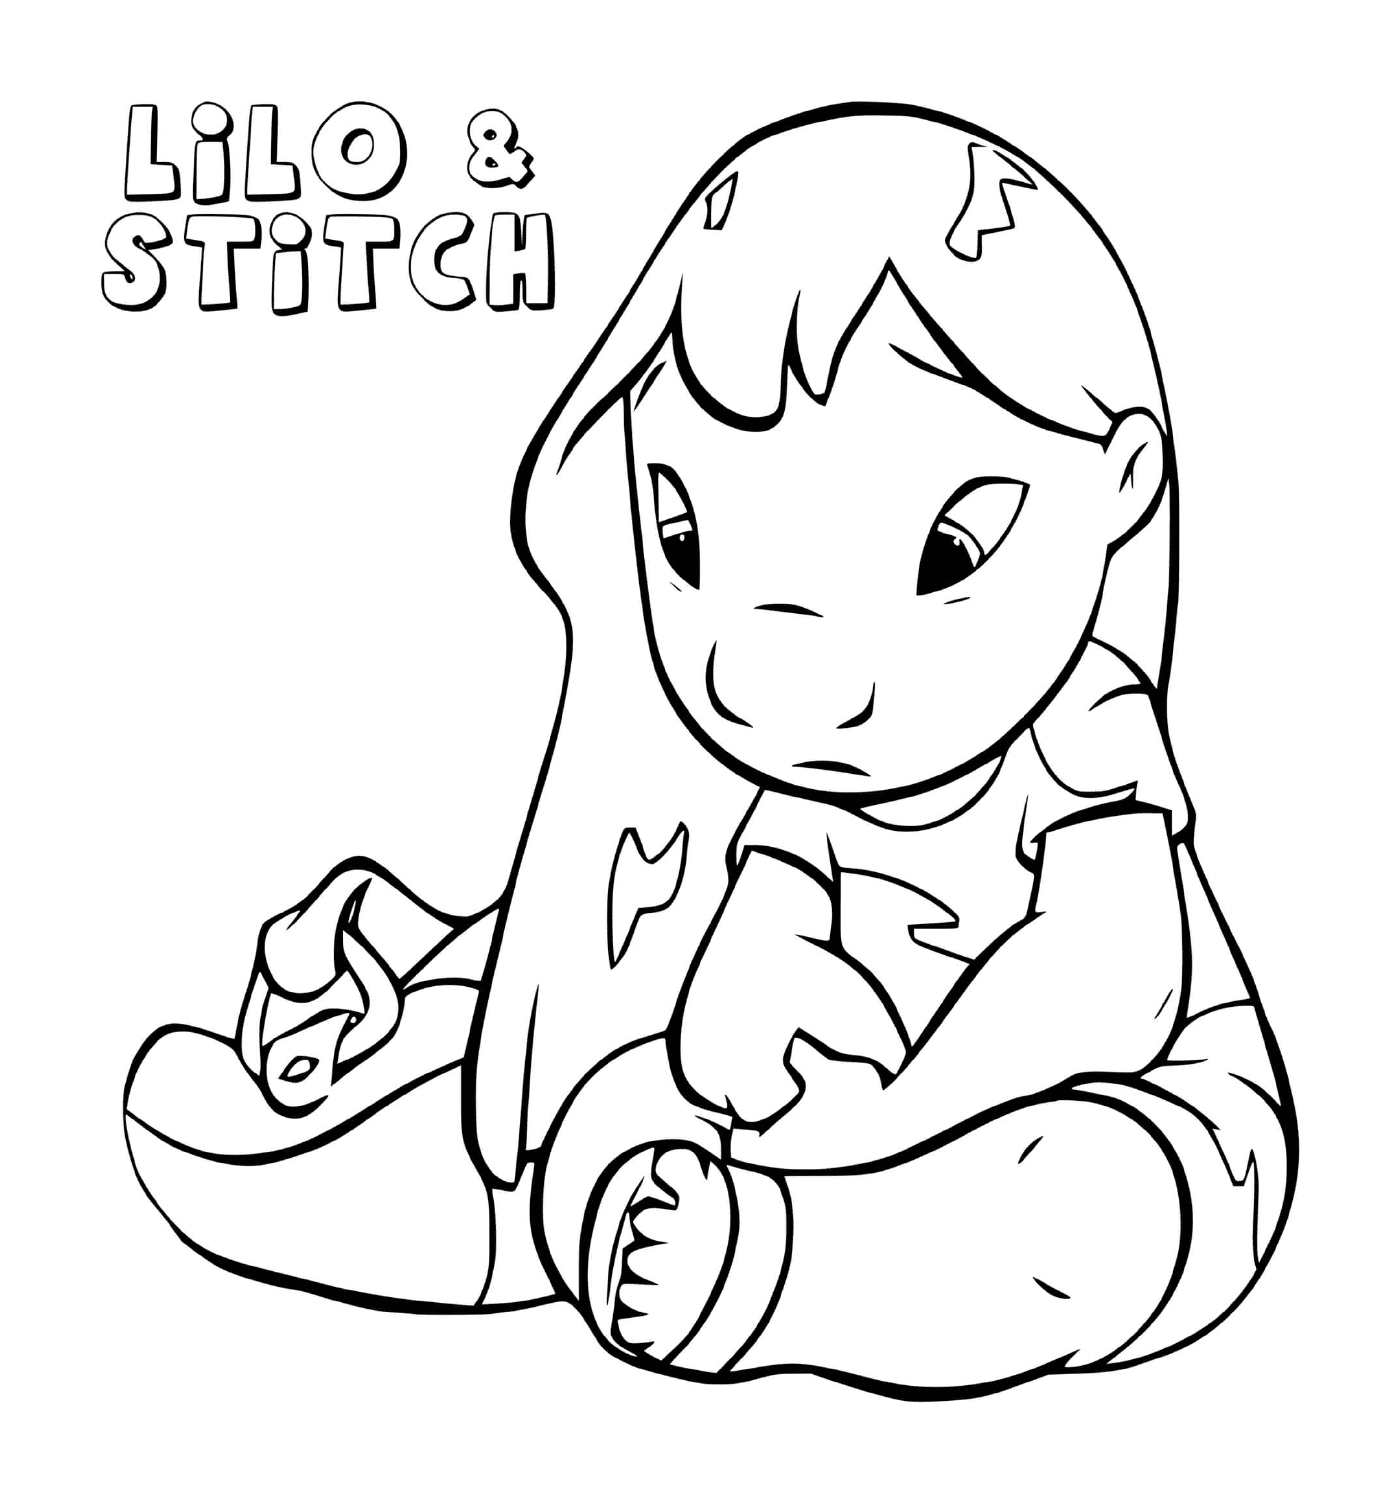   Lilo s'ennuie sans Stitch 